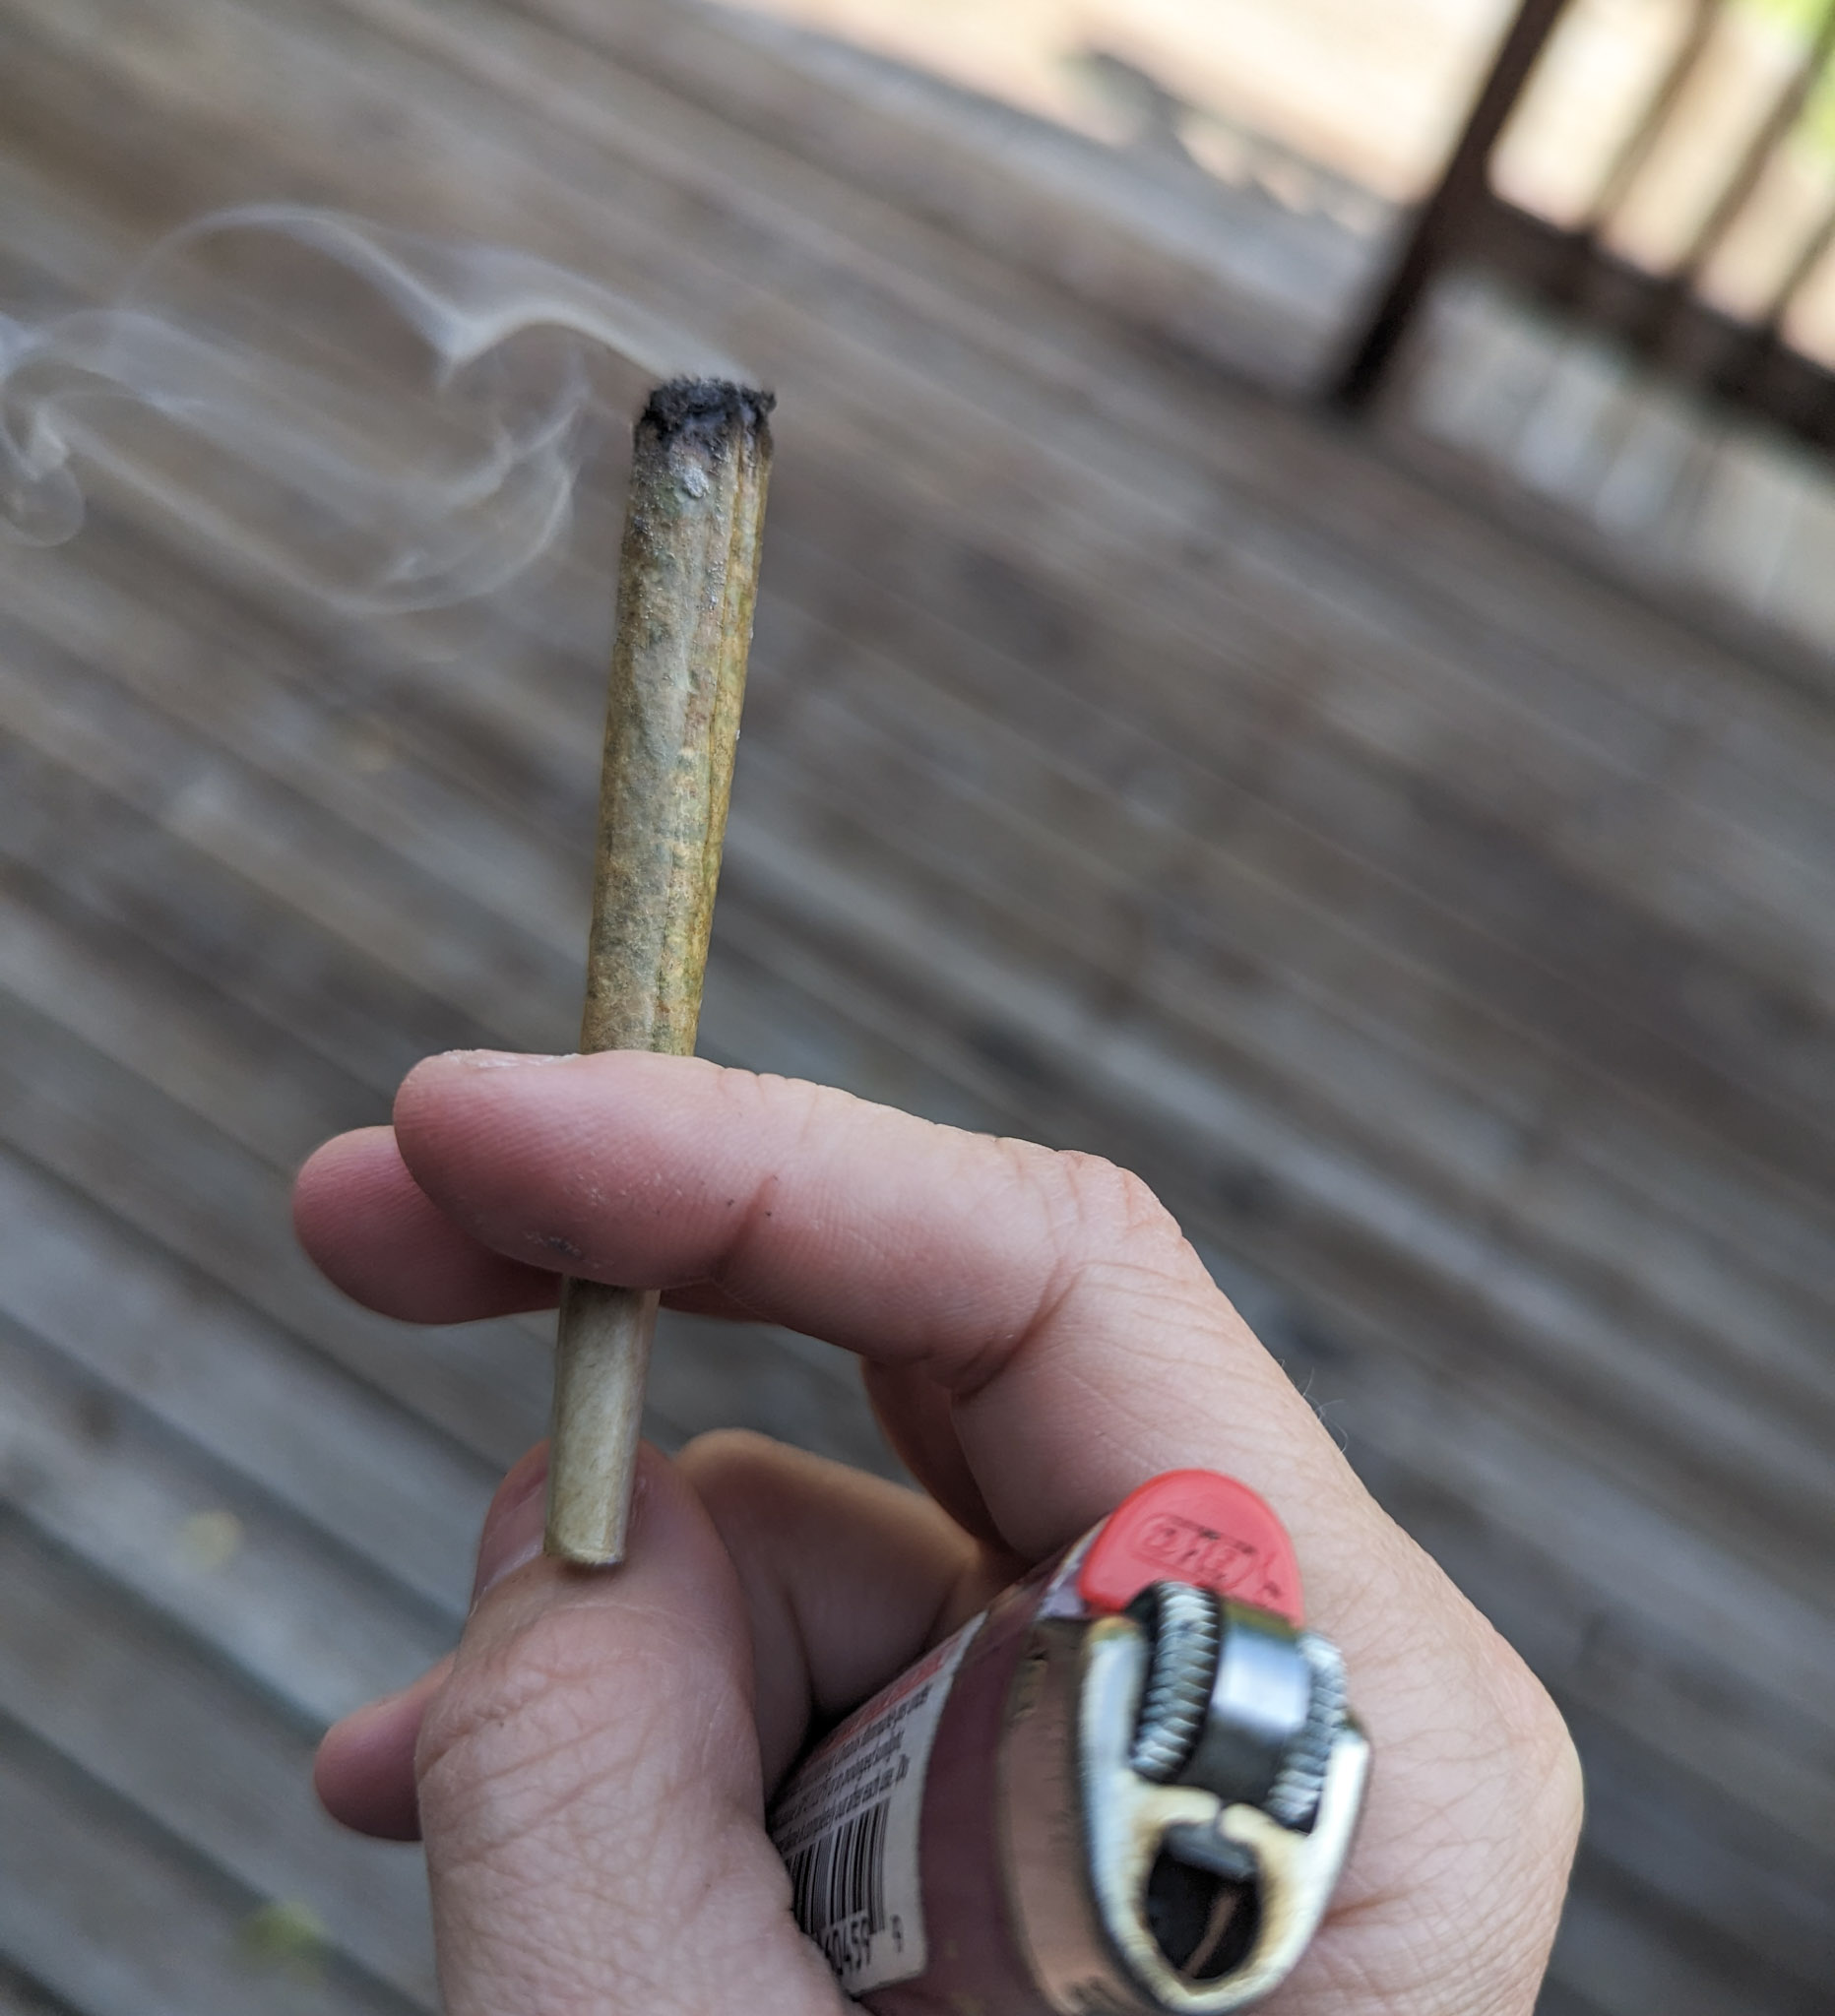 Smoking a joint of Cheetah Piss strain.